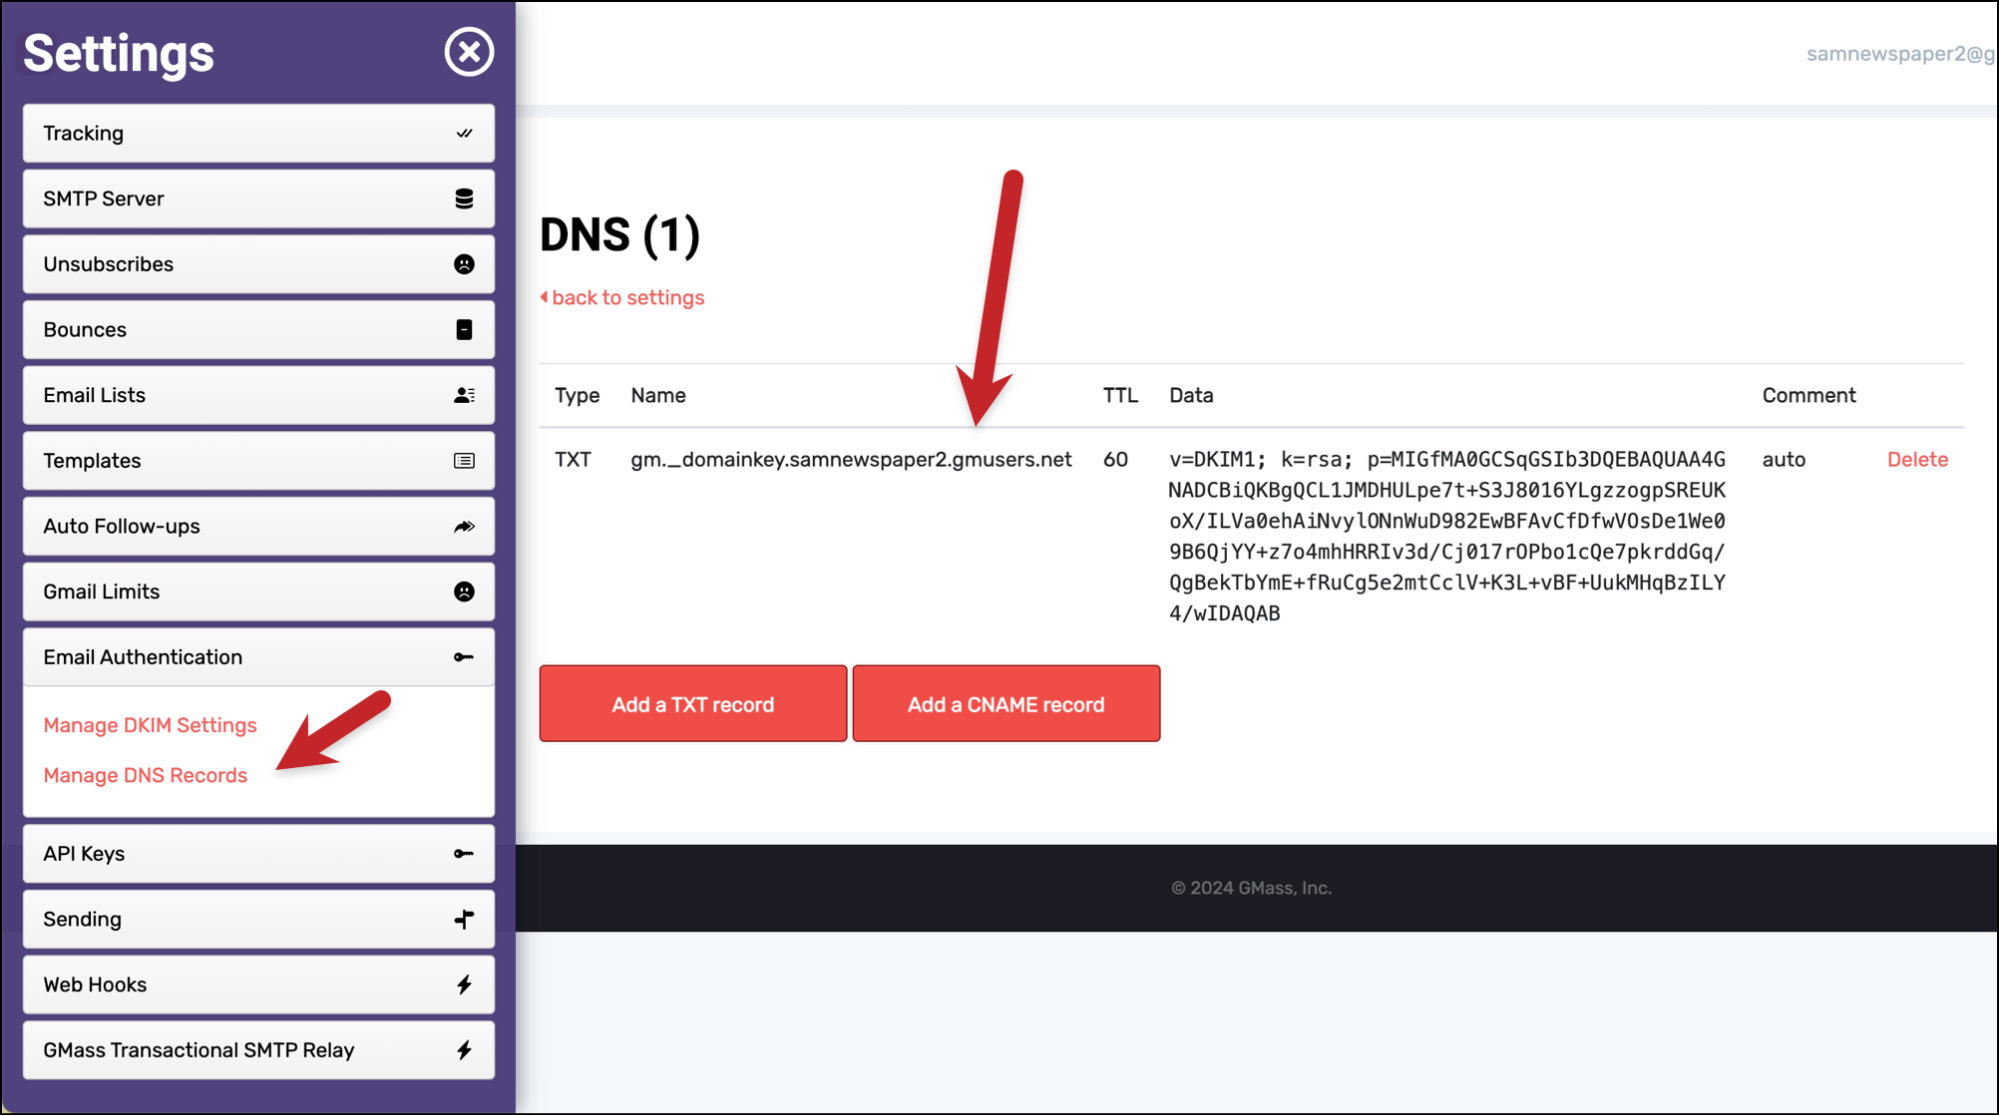 GMass generates a new DNS record